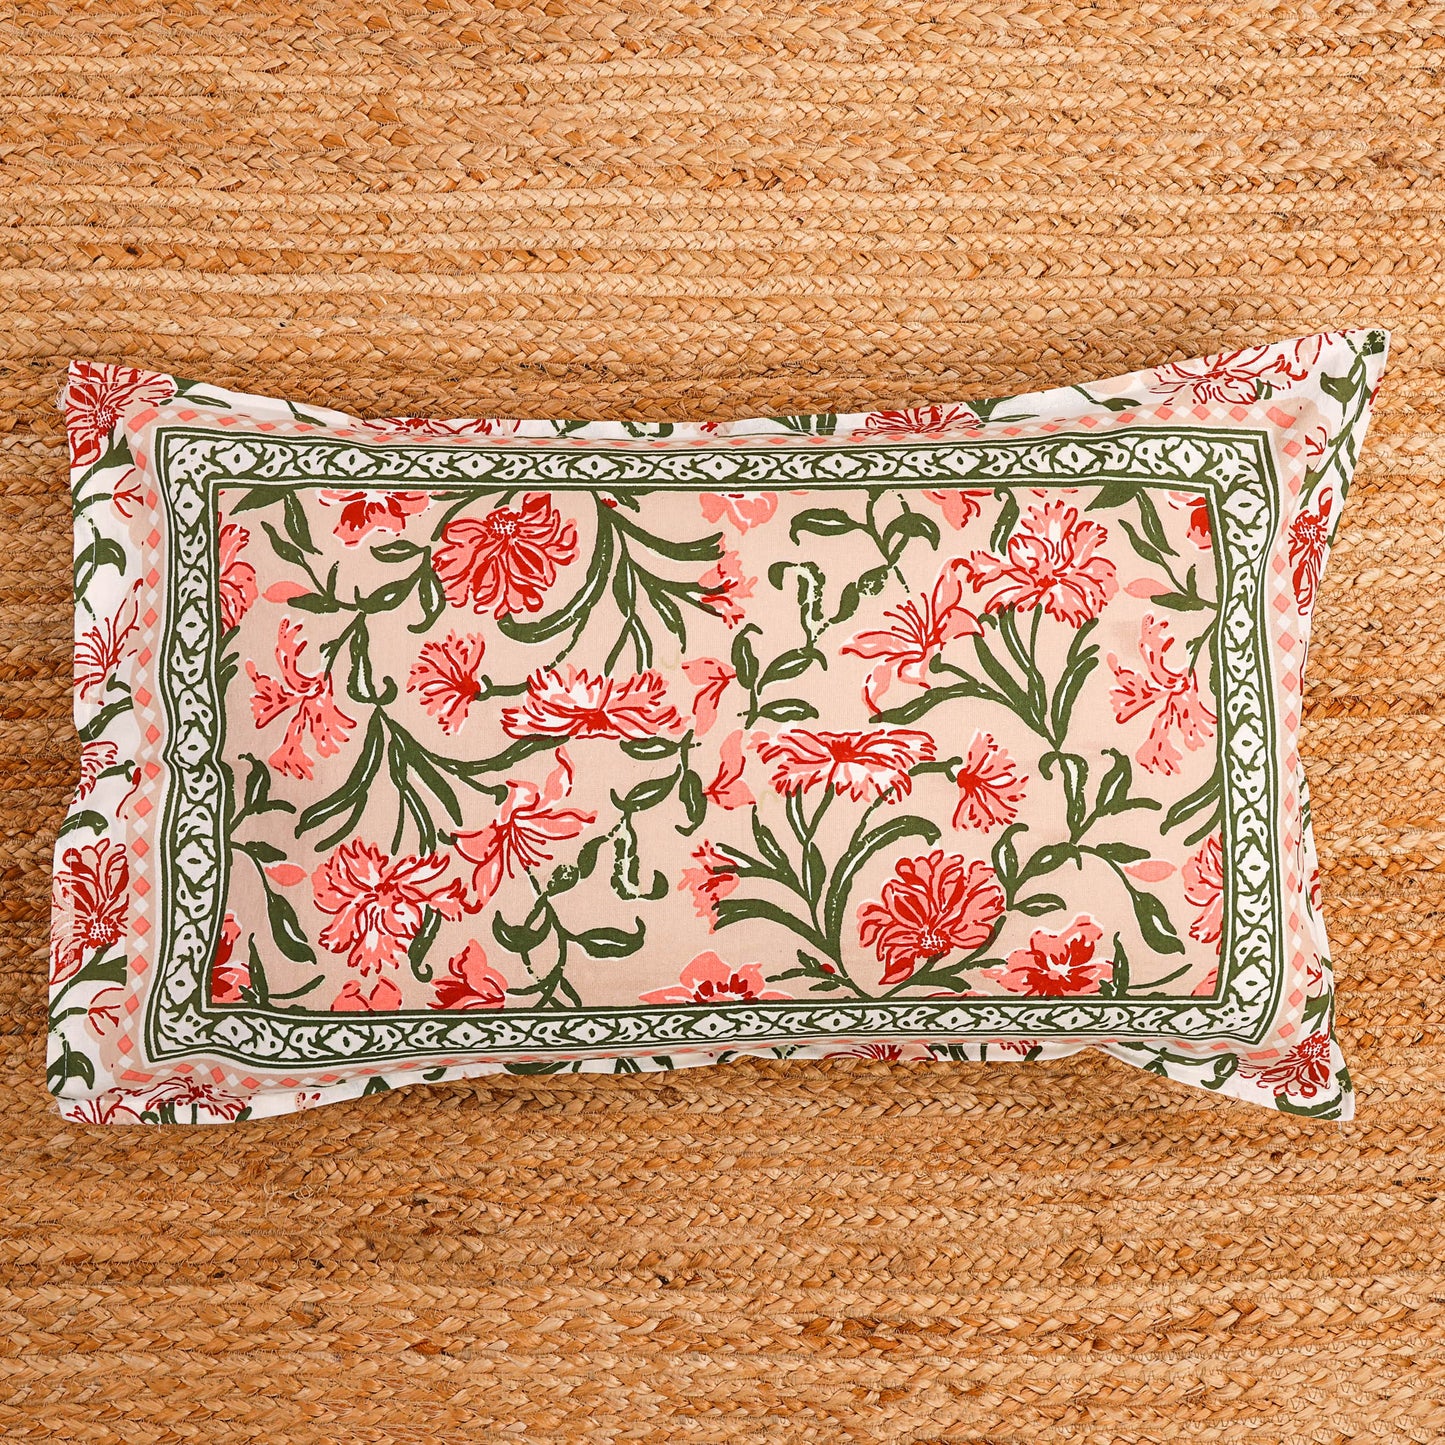 Pure Cotton Block Print Jaipuri Bedsheet - Super King Size 108*108 inches - Peach Floral